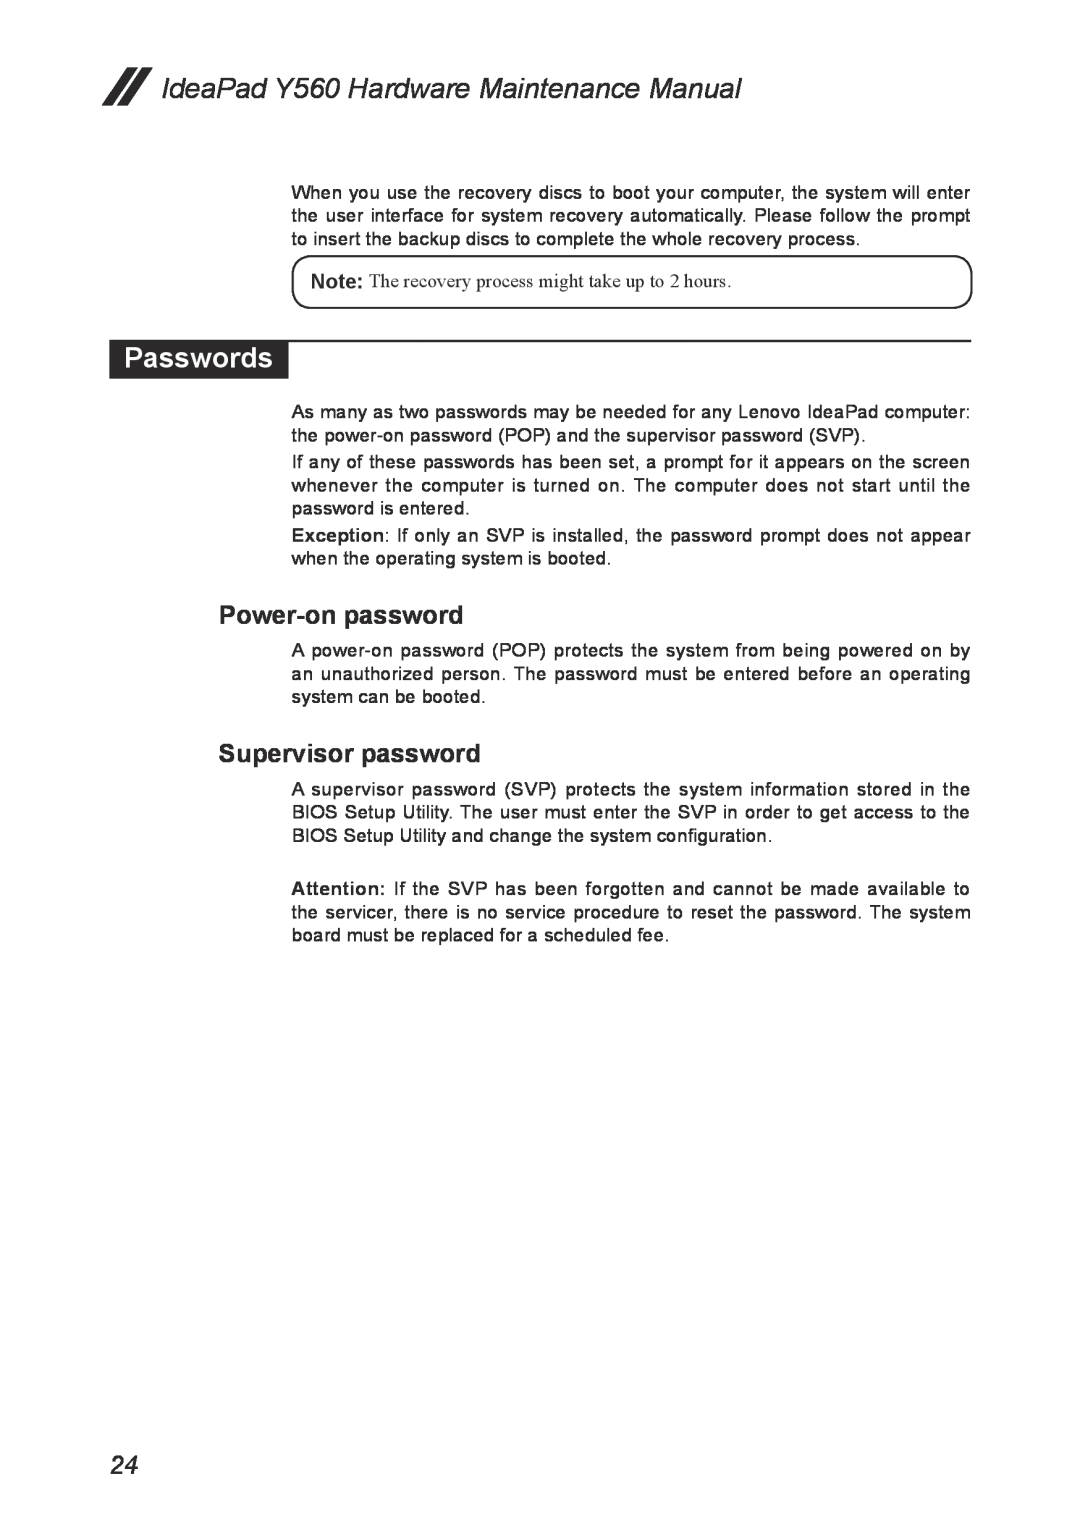 Lenovo manual Passwords, Power-on password, Supervisor password, IdeaPad Y560 Hardware Maintenance Manual 